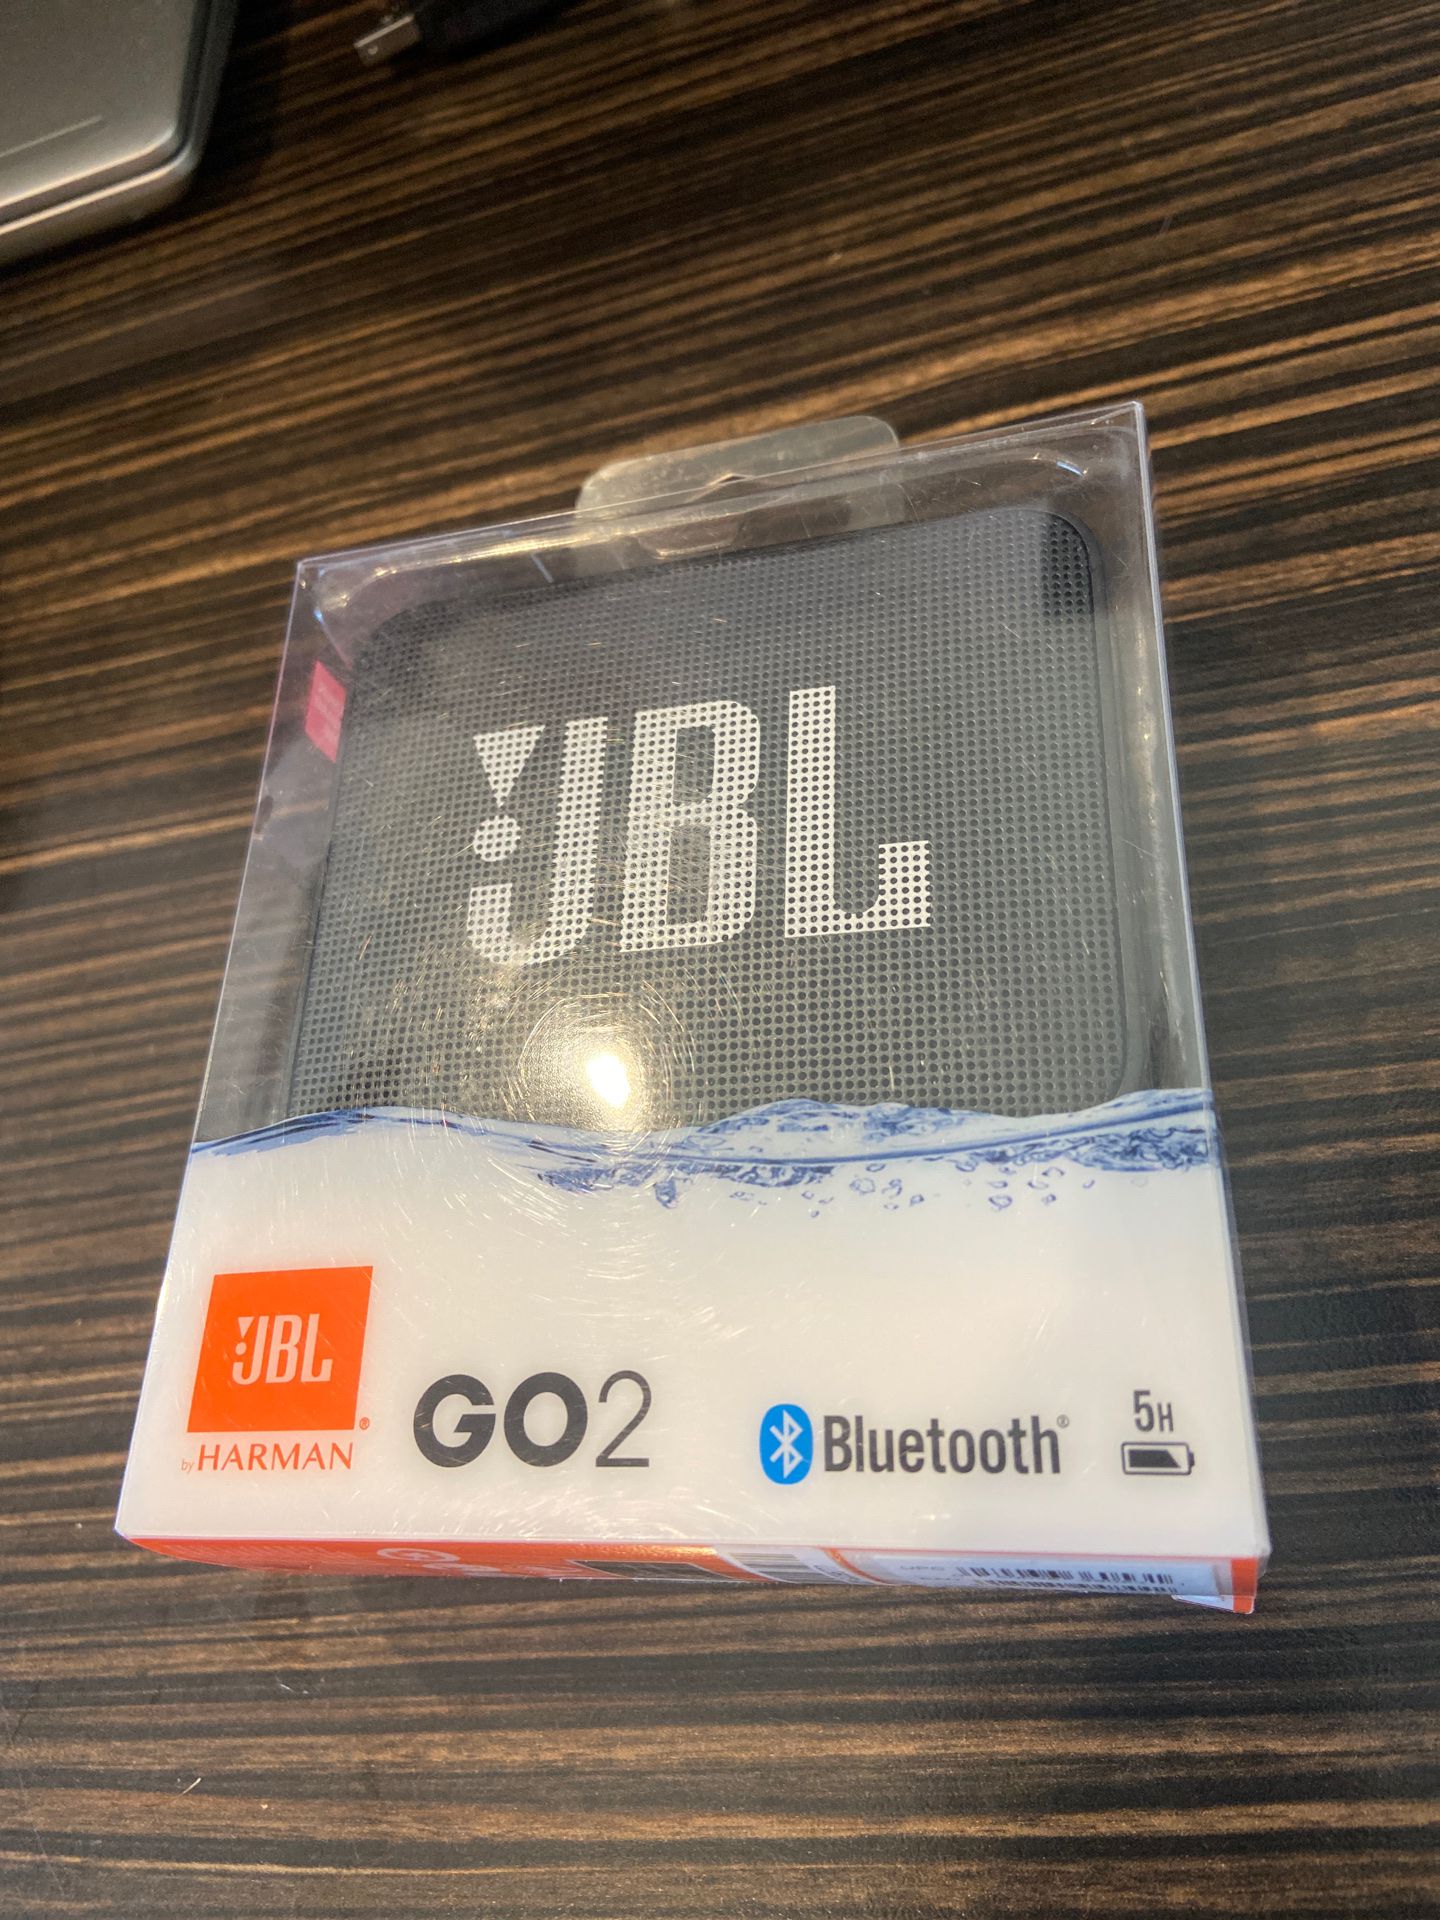 JBL Go2 Bluetooth speaker